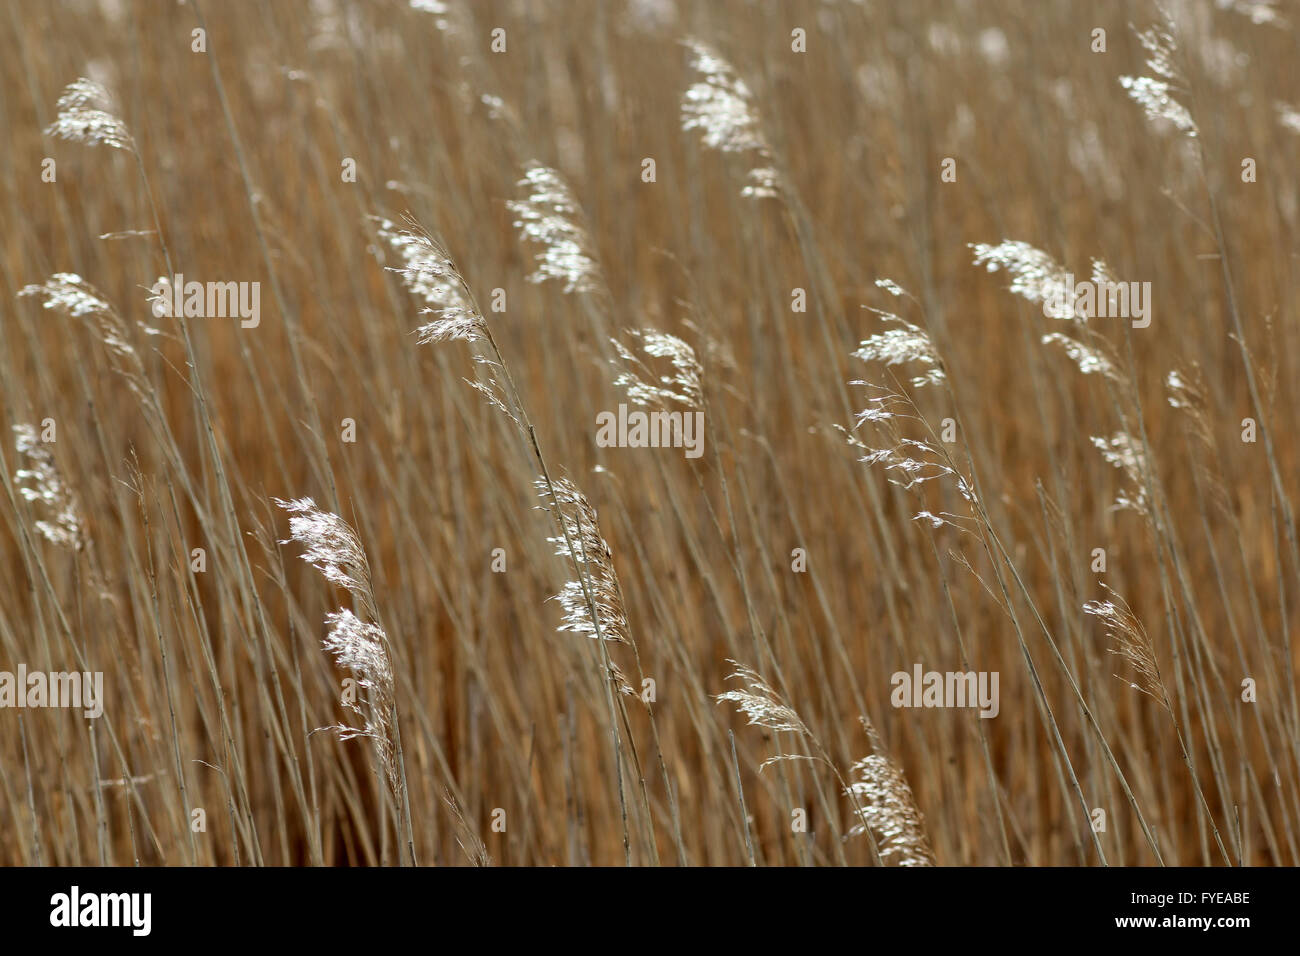 reeds Dingle Marshes Walberswick Suffolk Stock Photo